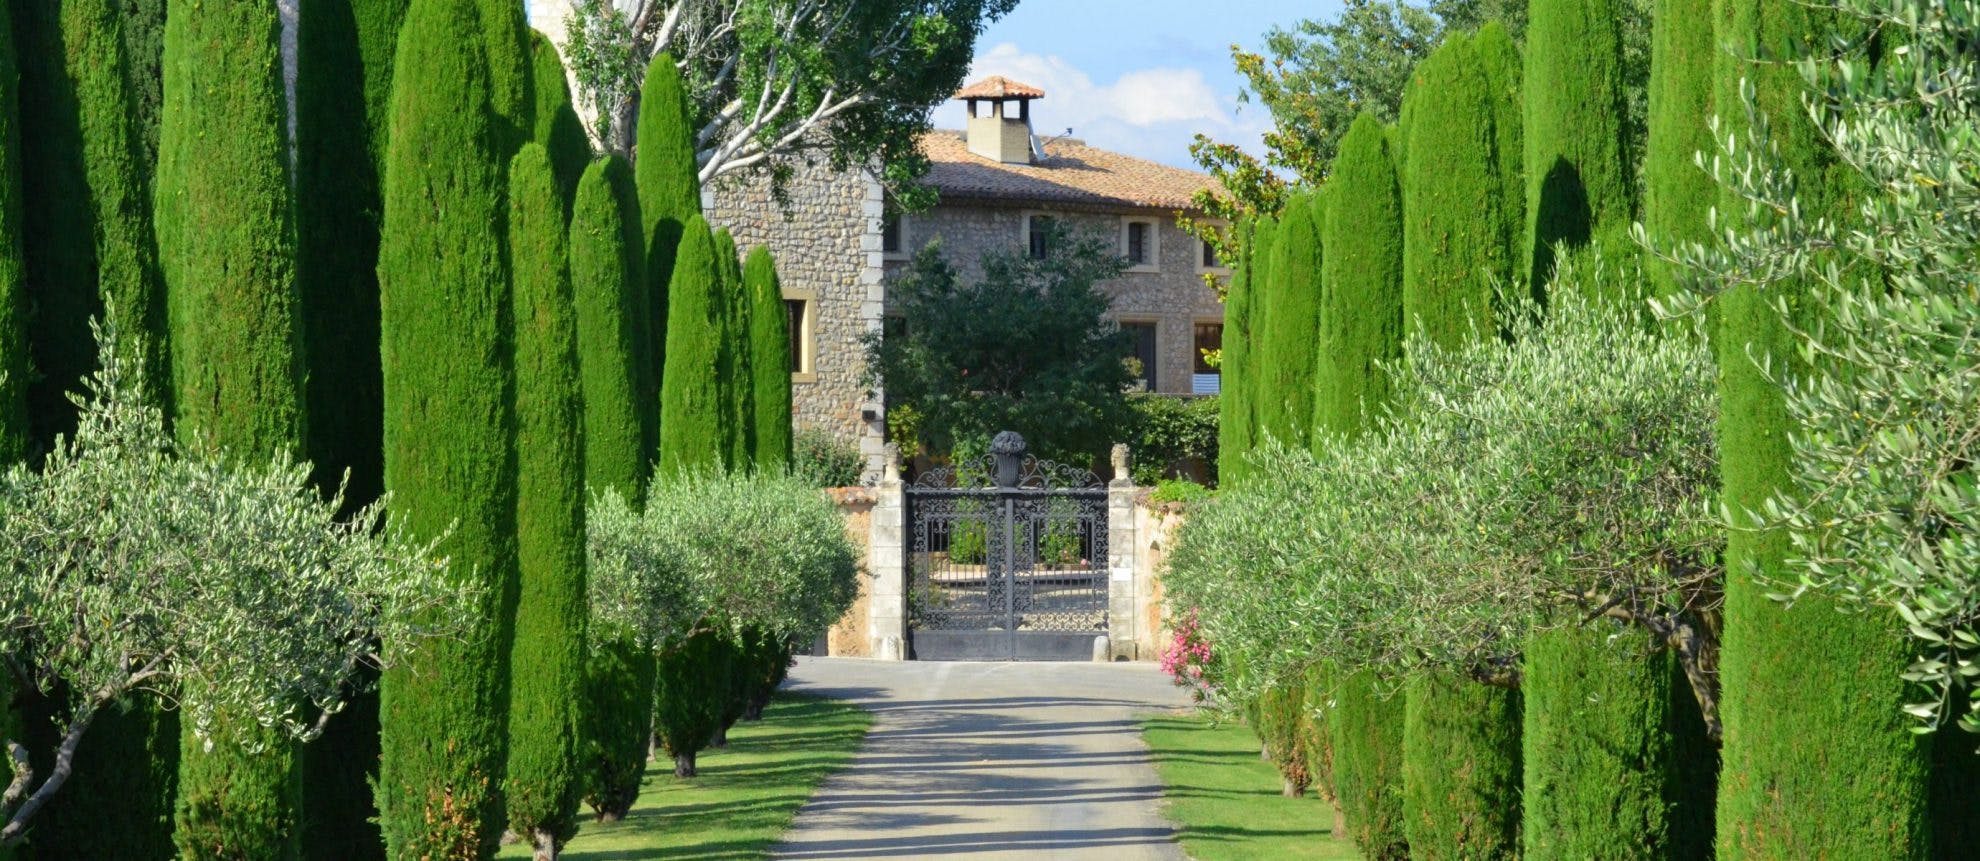 Månadens vinhus- Chateau de Berne, Provence